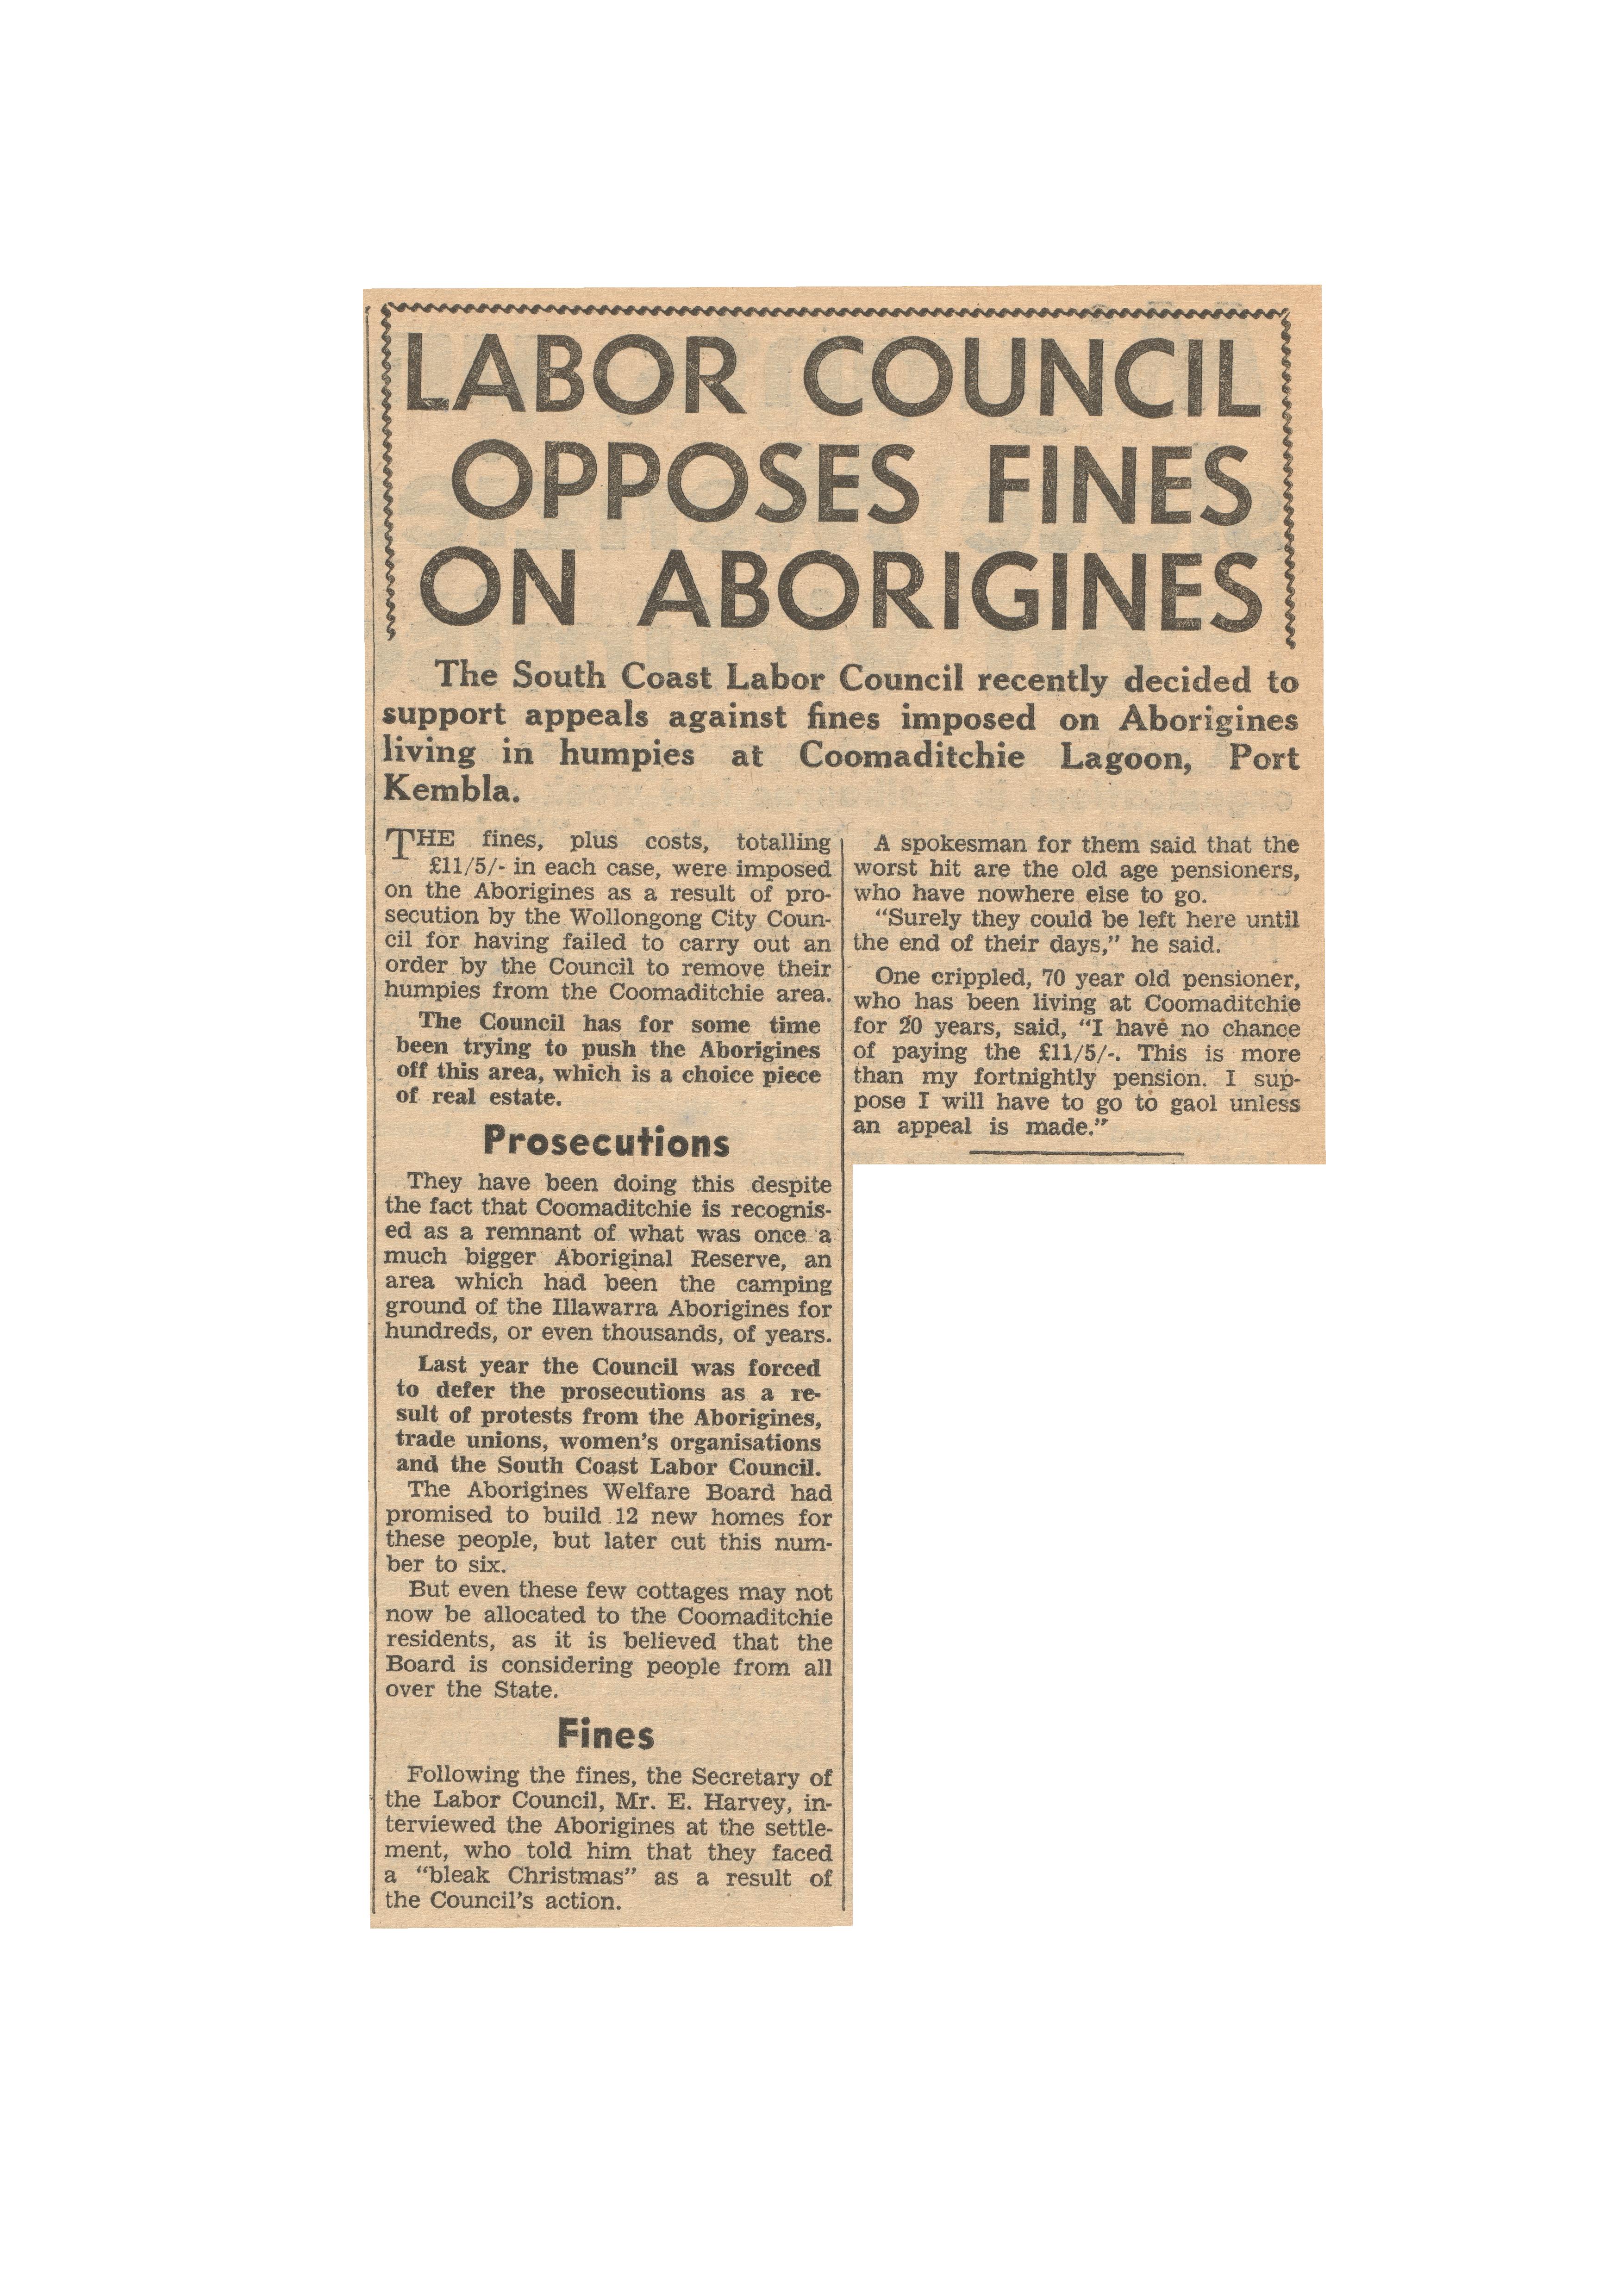 ‘Labour Council opposes fines on Aborigines’, The Tribune, 5 December 1962, p9 © Tribune/SEARCH Foundation 